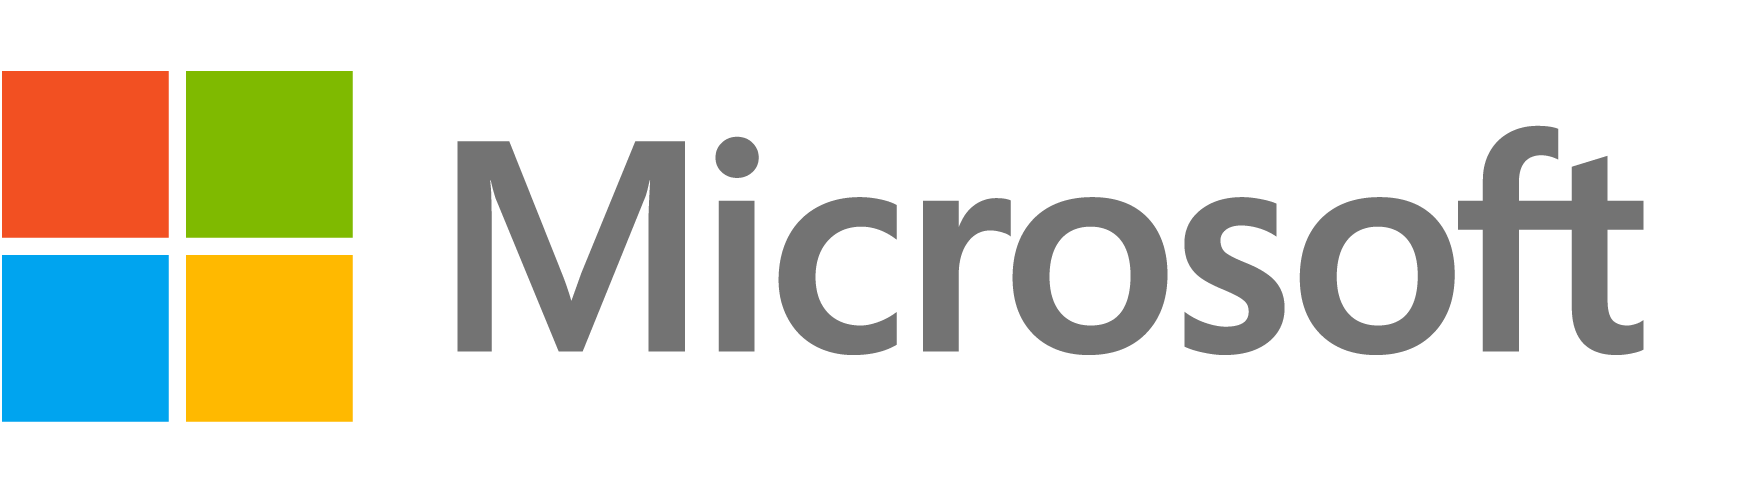 Microsoft-Logo-PNG-e1487111483809